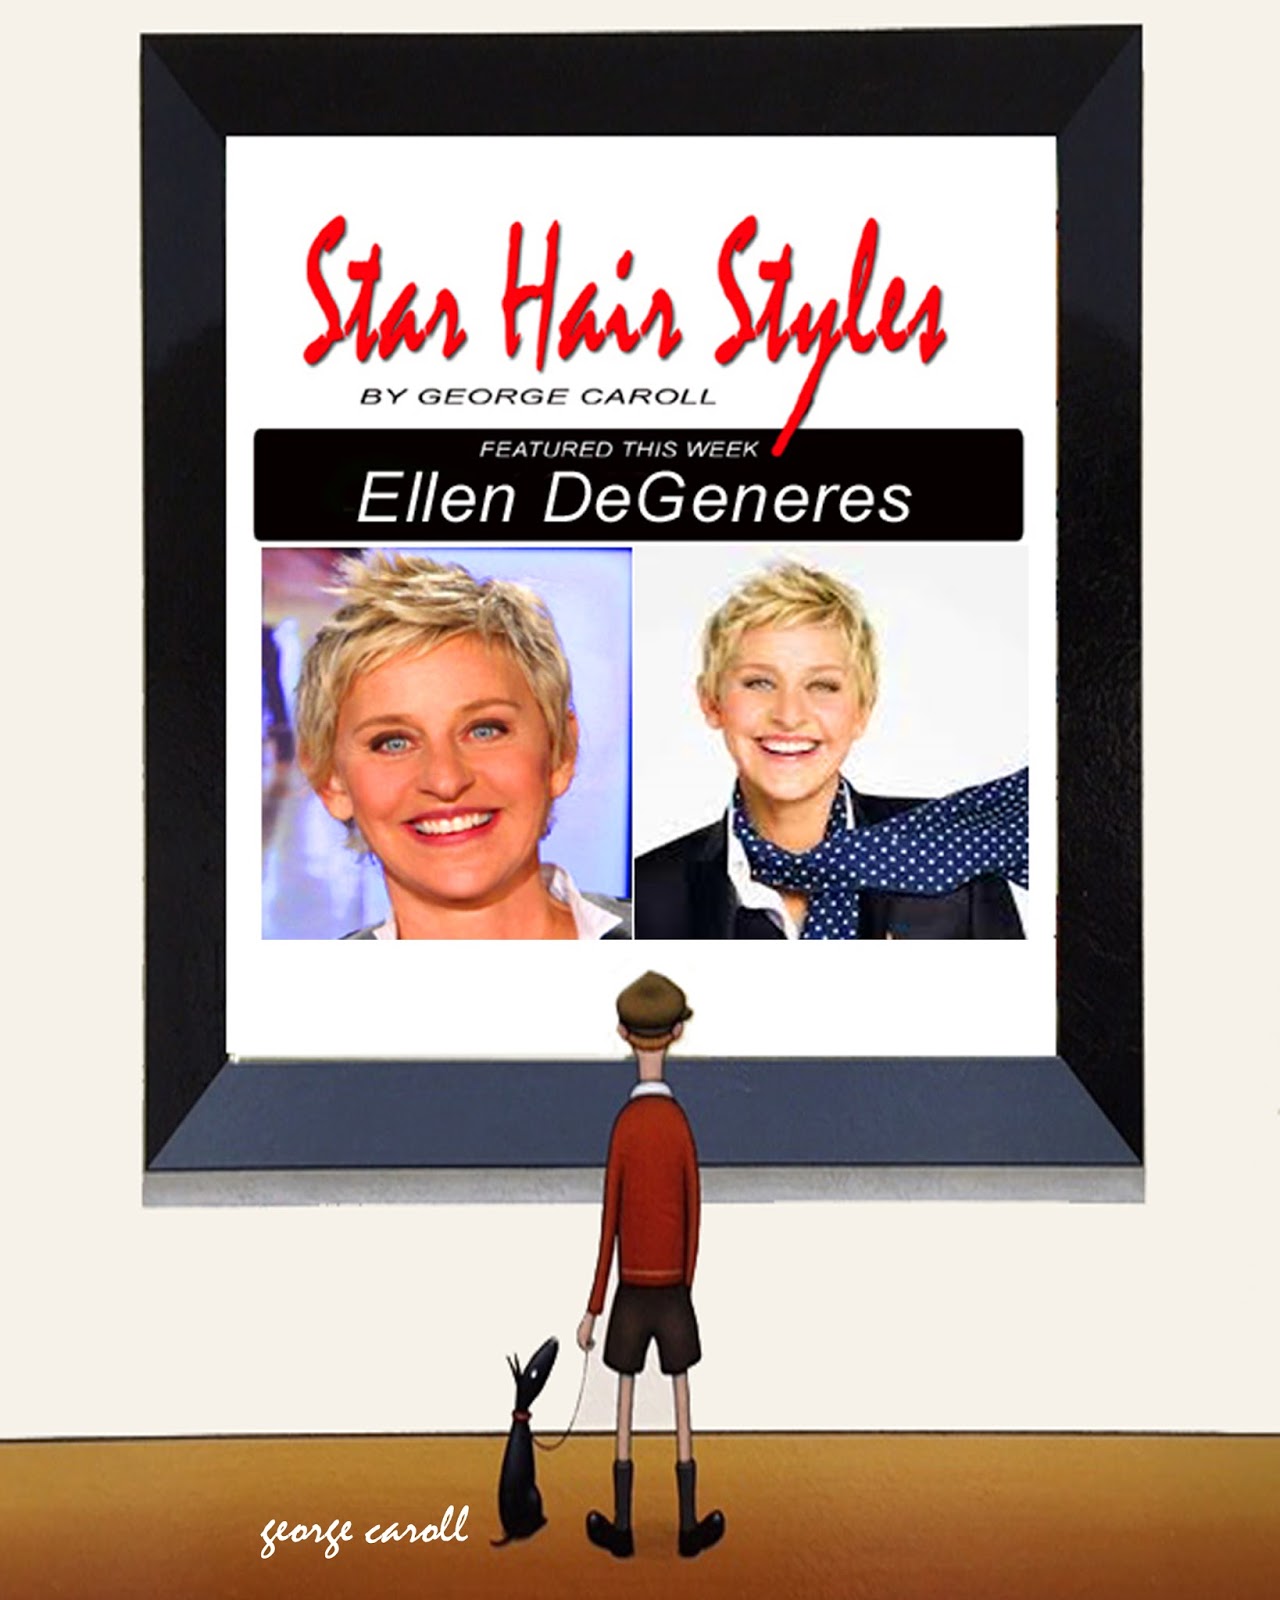 George Caroll Hollywood Hair Stylist Star Hair Style Ellen